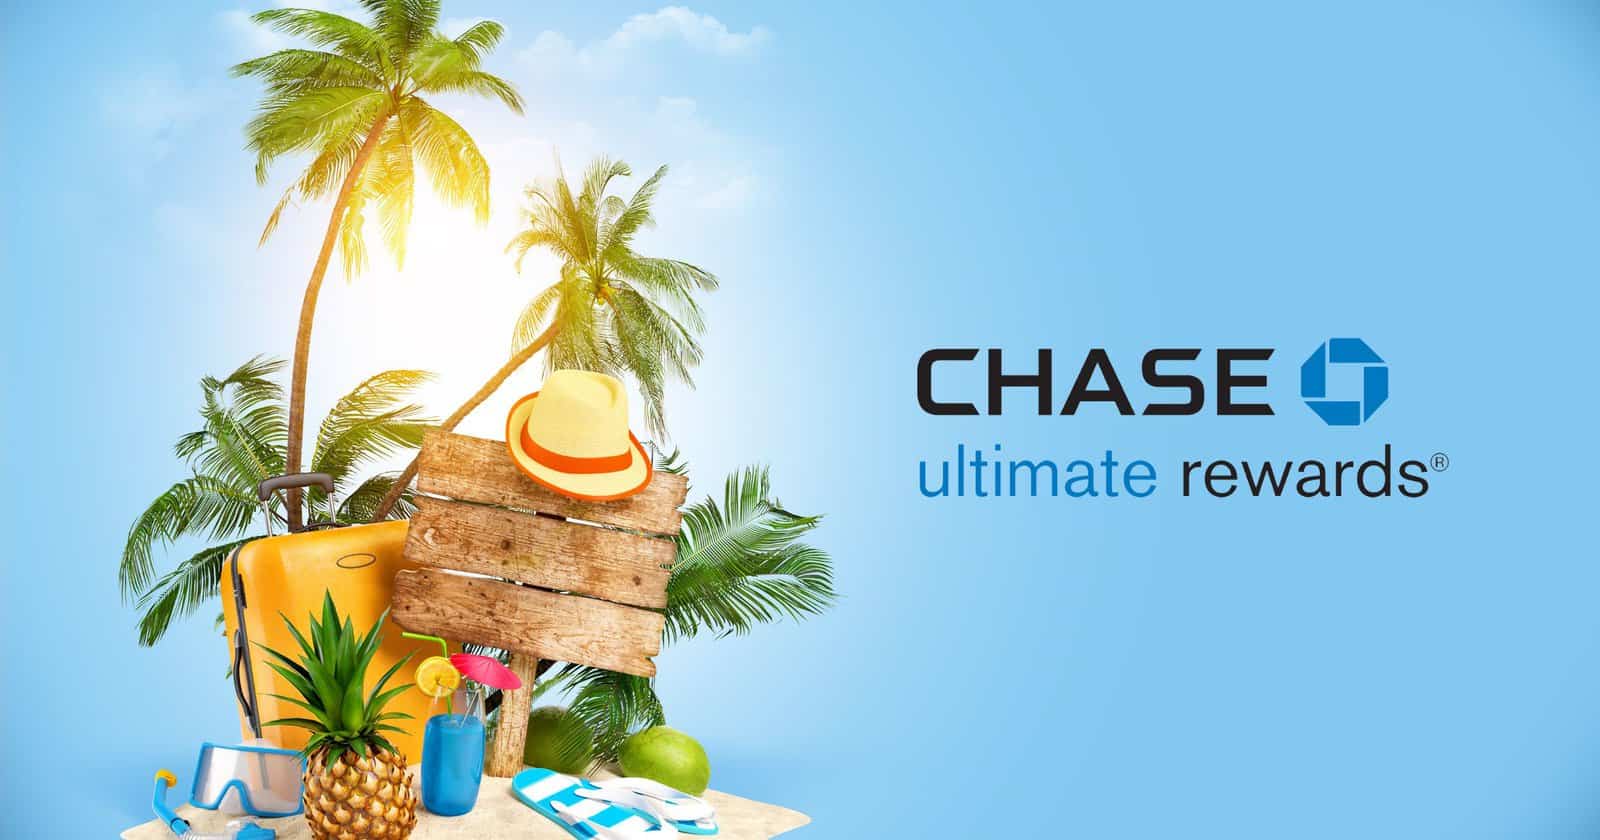 Chase Ultimate Rewards